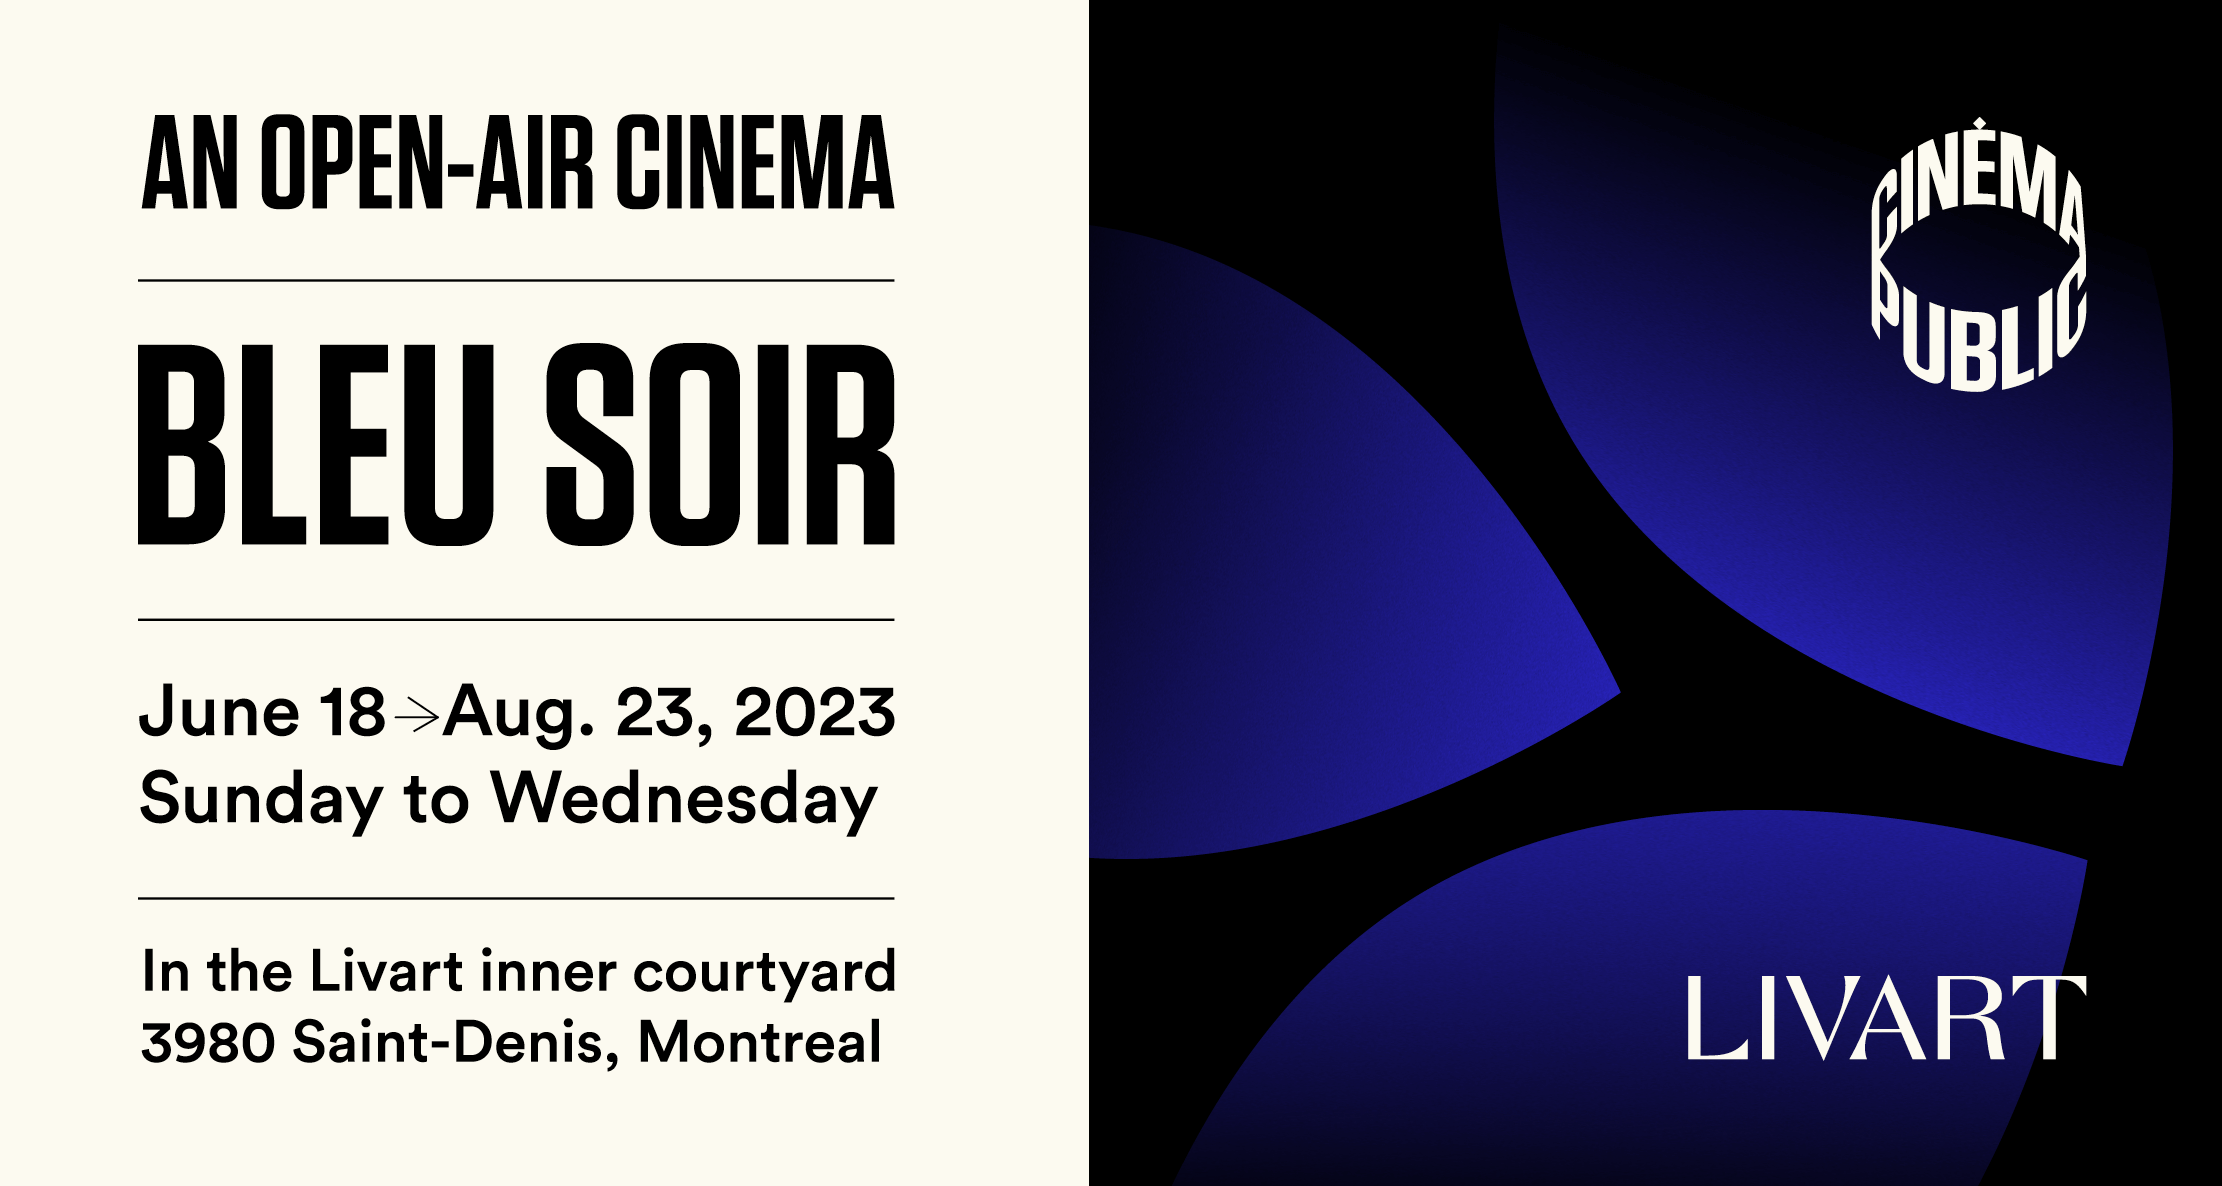 Cinema Public × Livart – Bleu soir, an open-air cinema Cinema Public